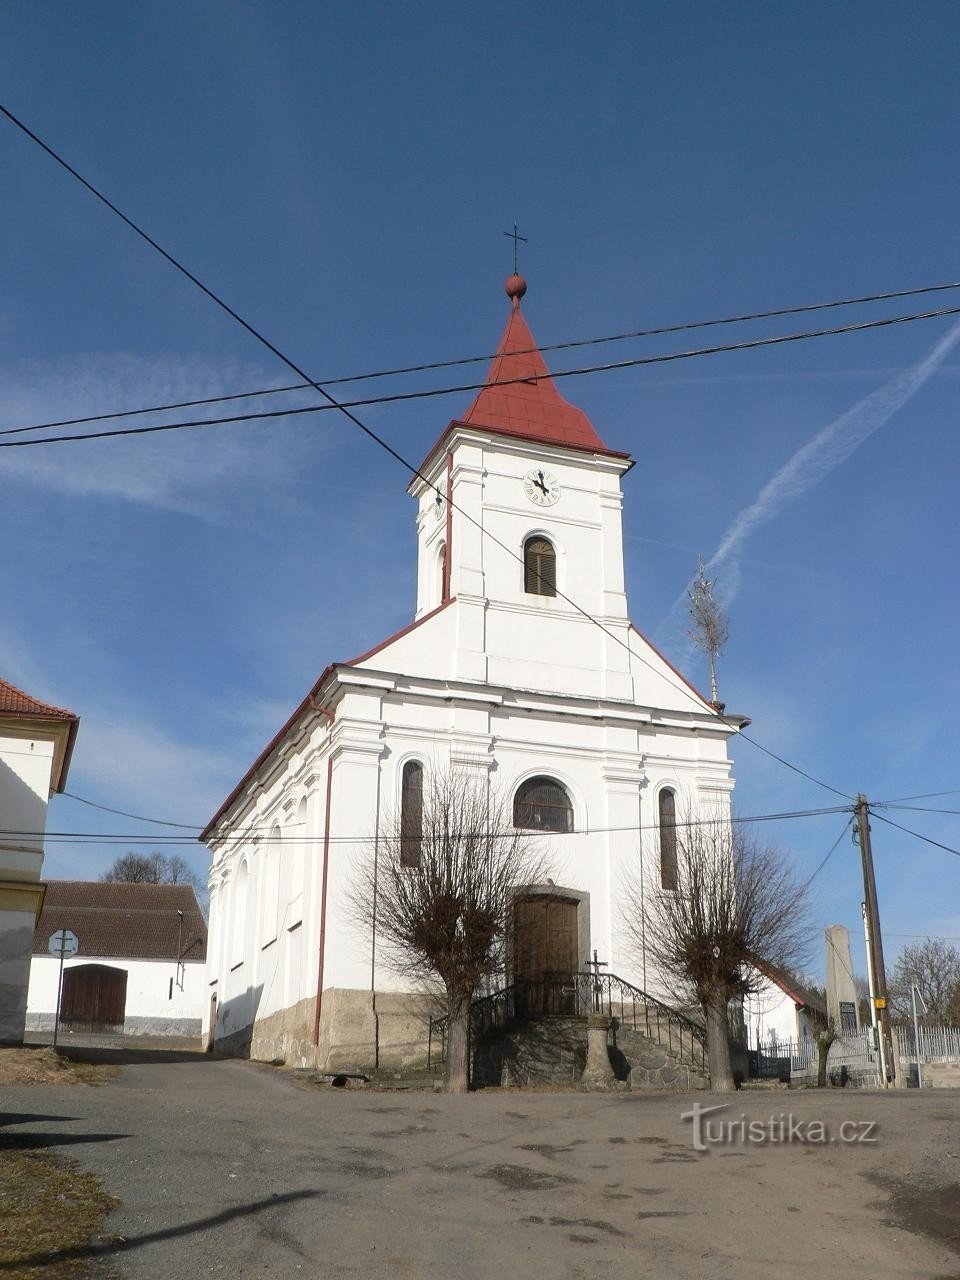 Velenovy, fața bisericii